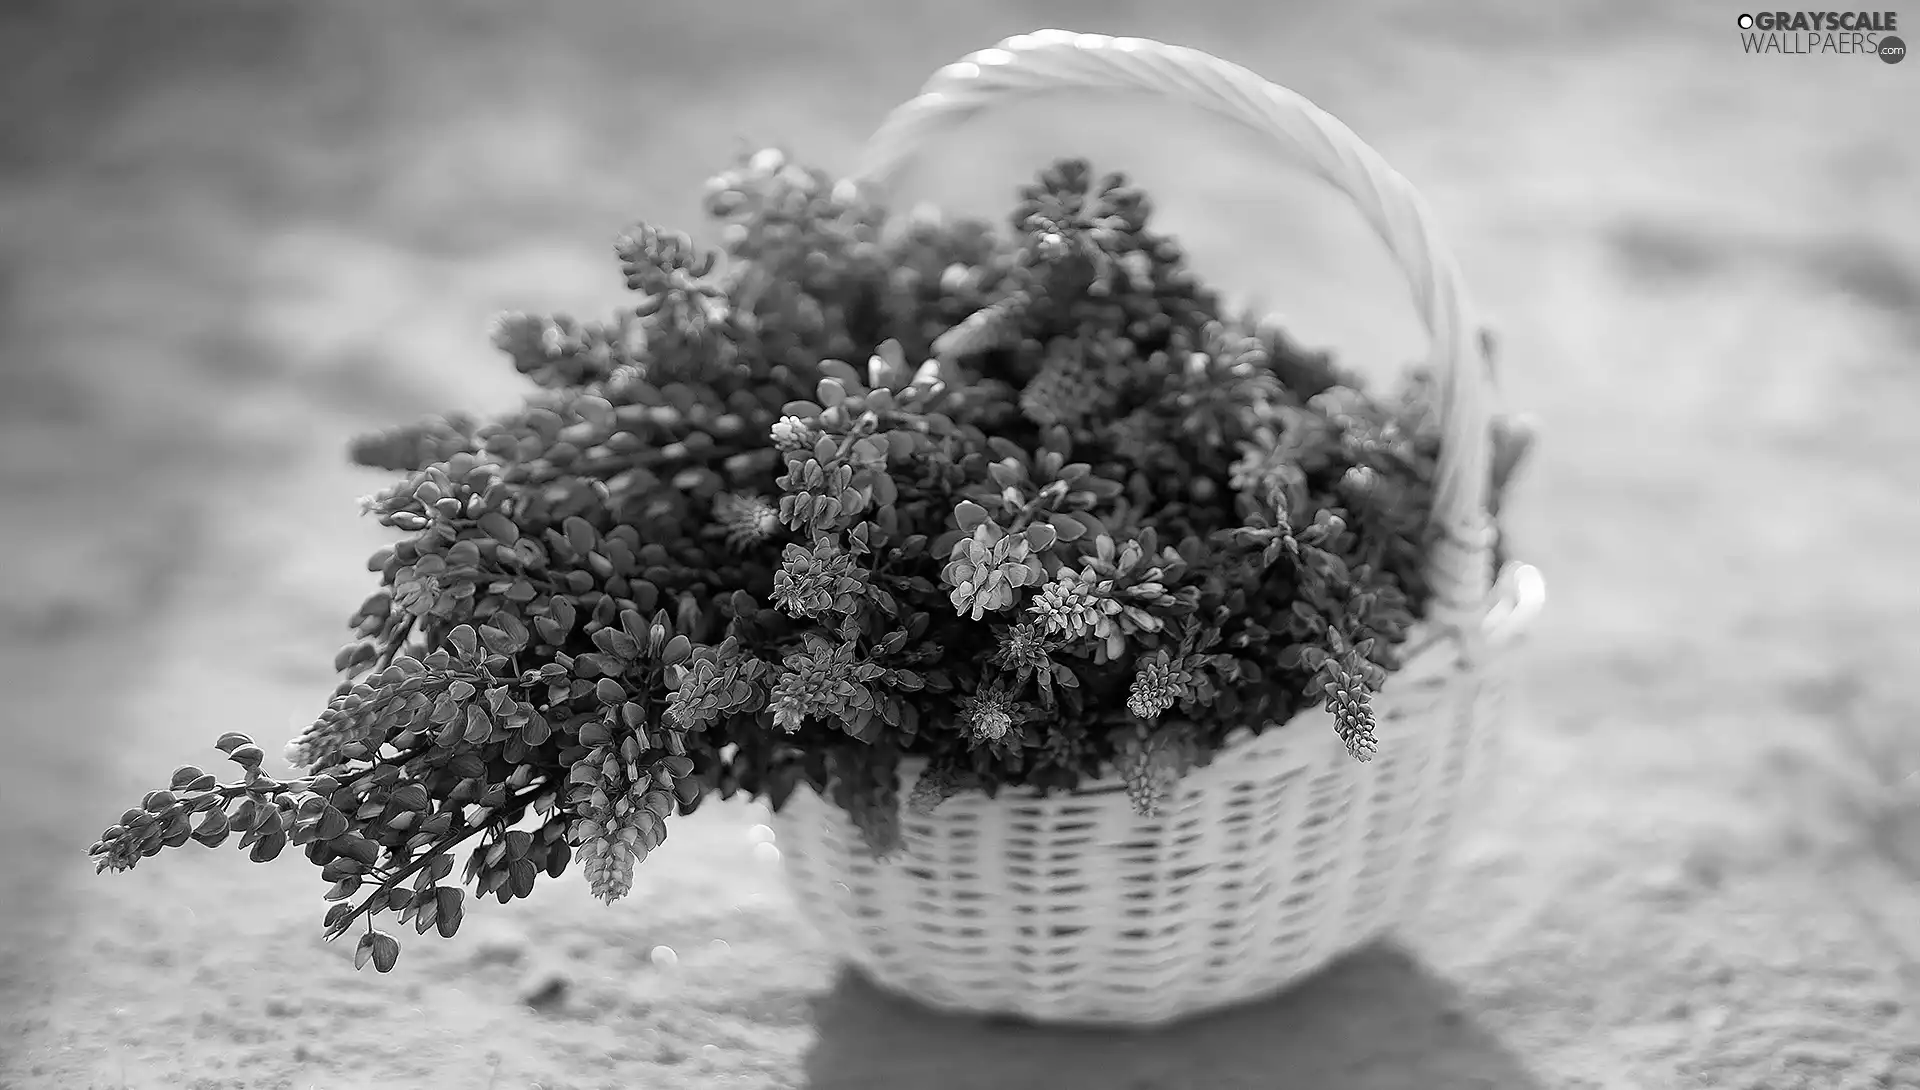 basket, Flowers, lupine